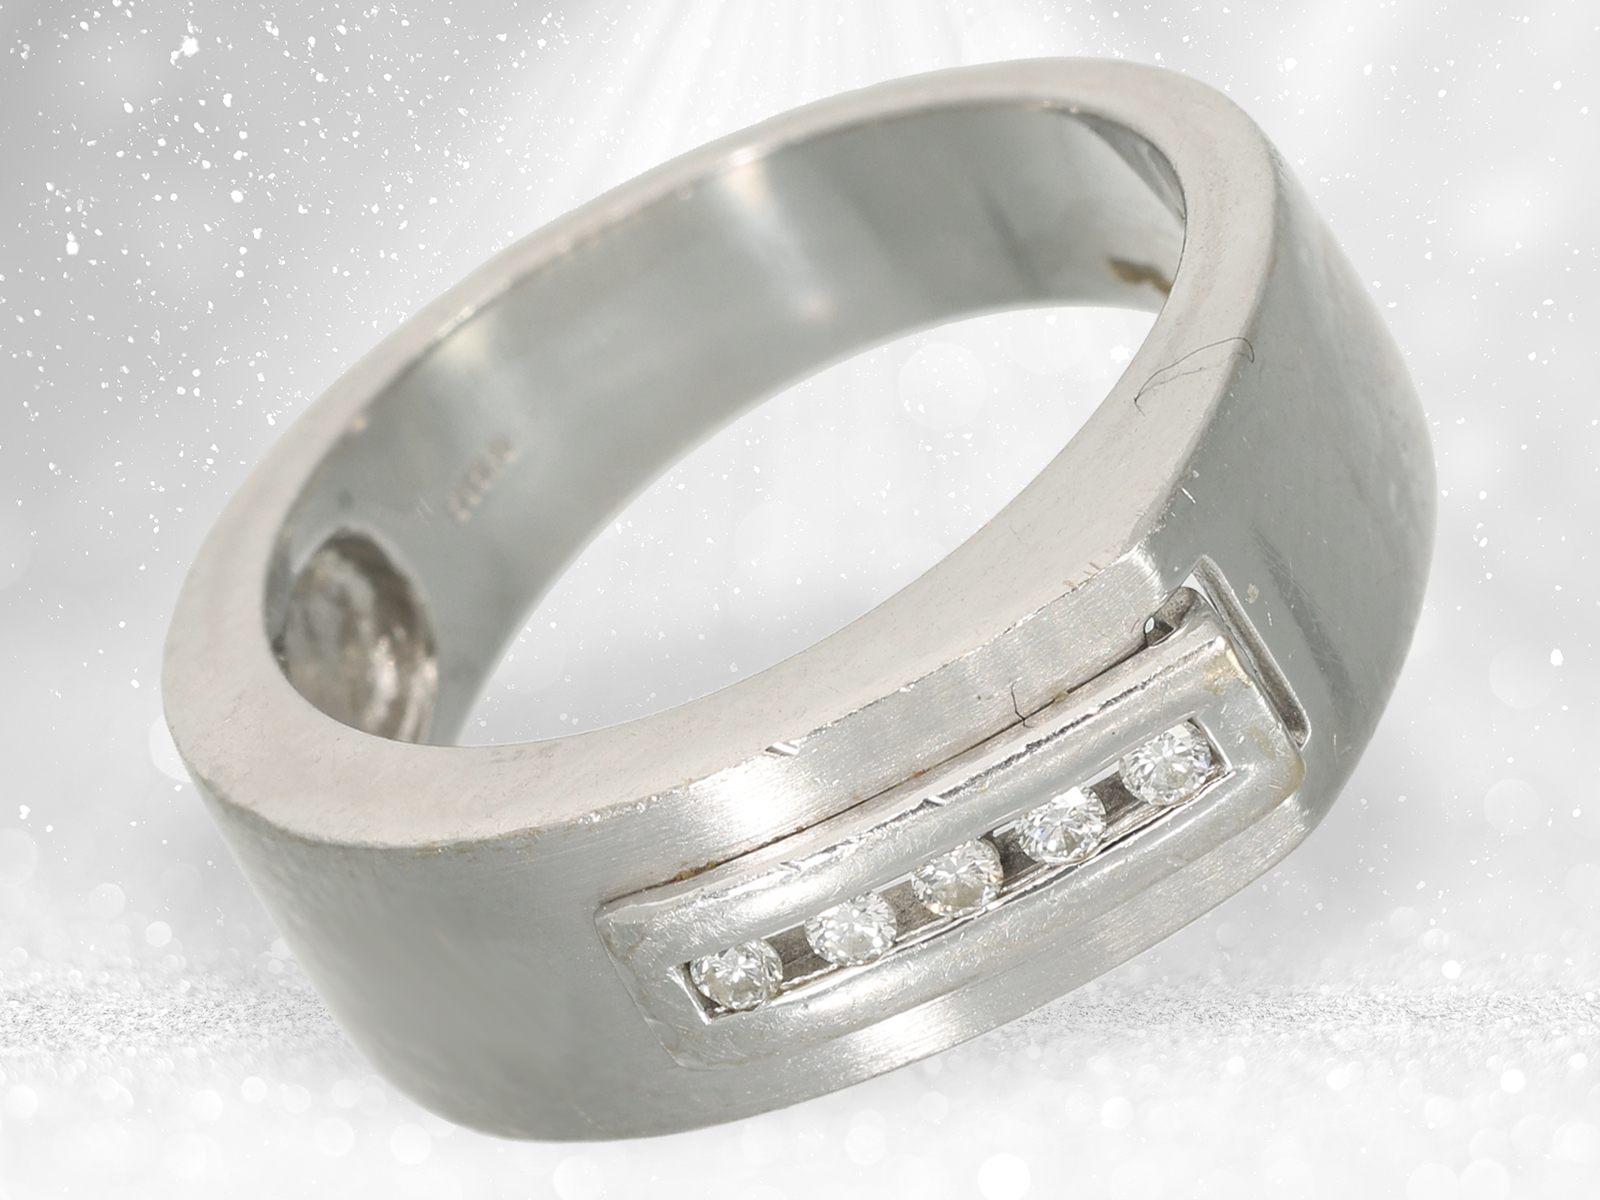 Earrings/ring/pendant: modern white gold designer jewellery set with brilliant-cut diamonds - Image 4 of 4